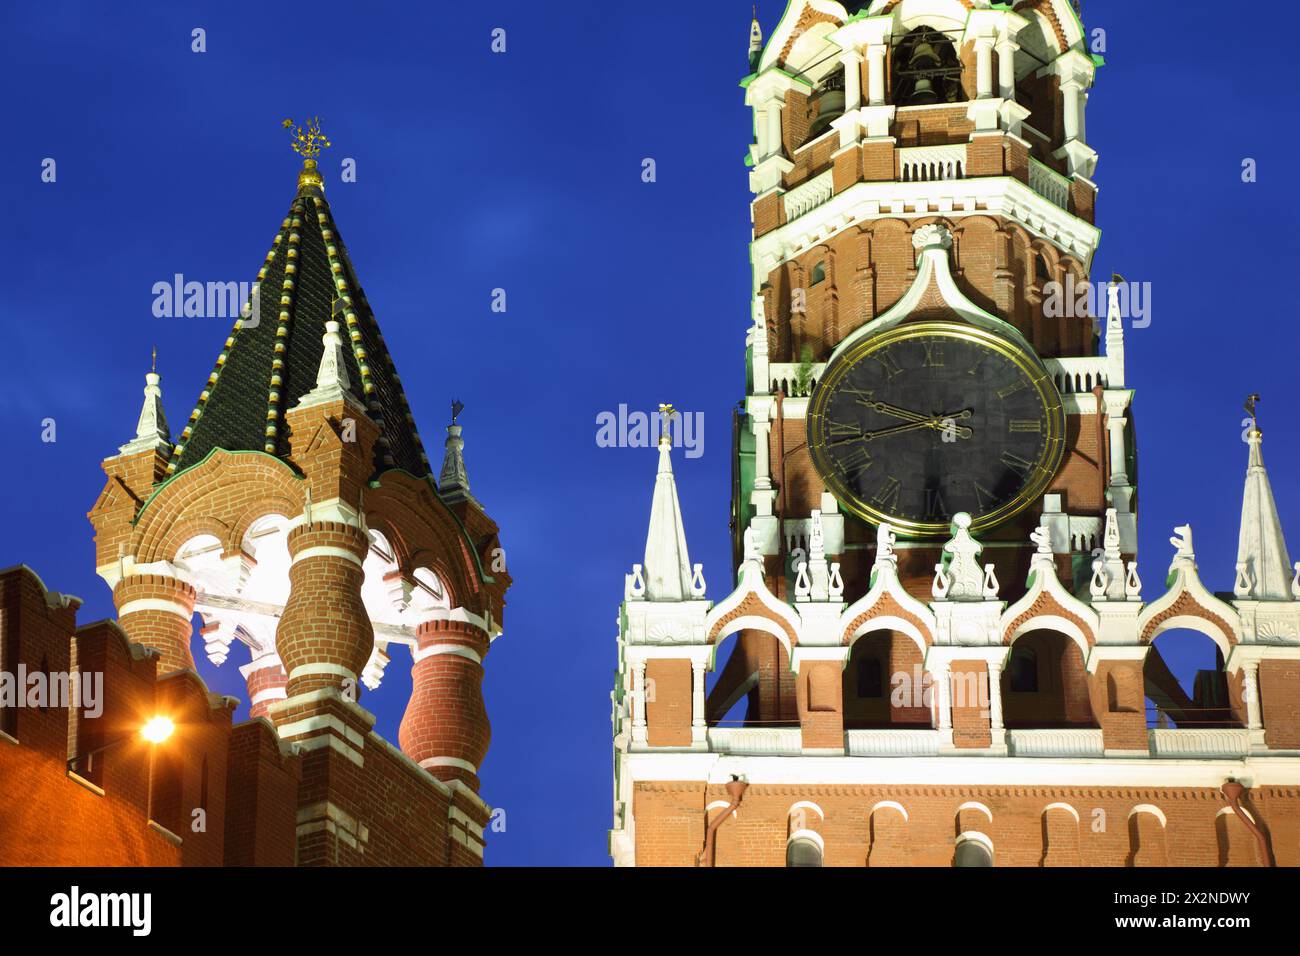 Große Uhr des Spasskaya-Turms und des Tsatskaja-Turms des Kremls am Abend. Stockfoto